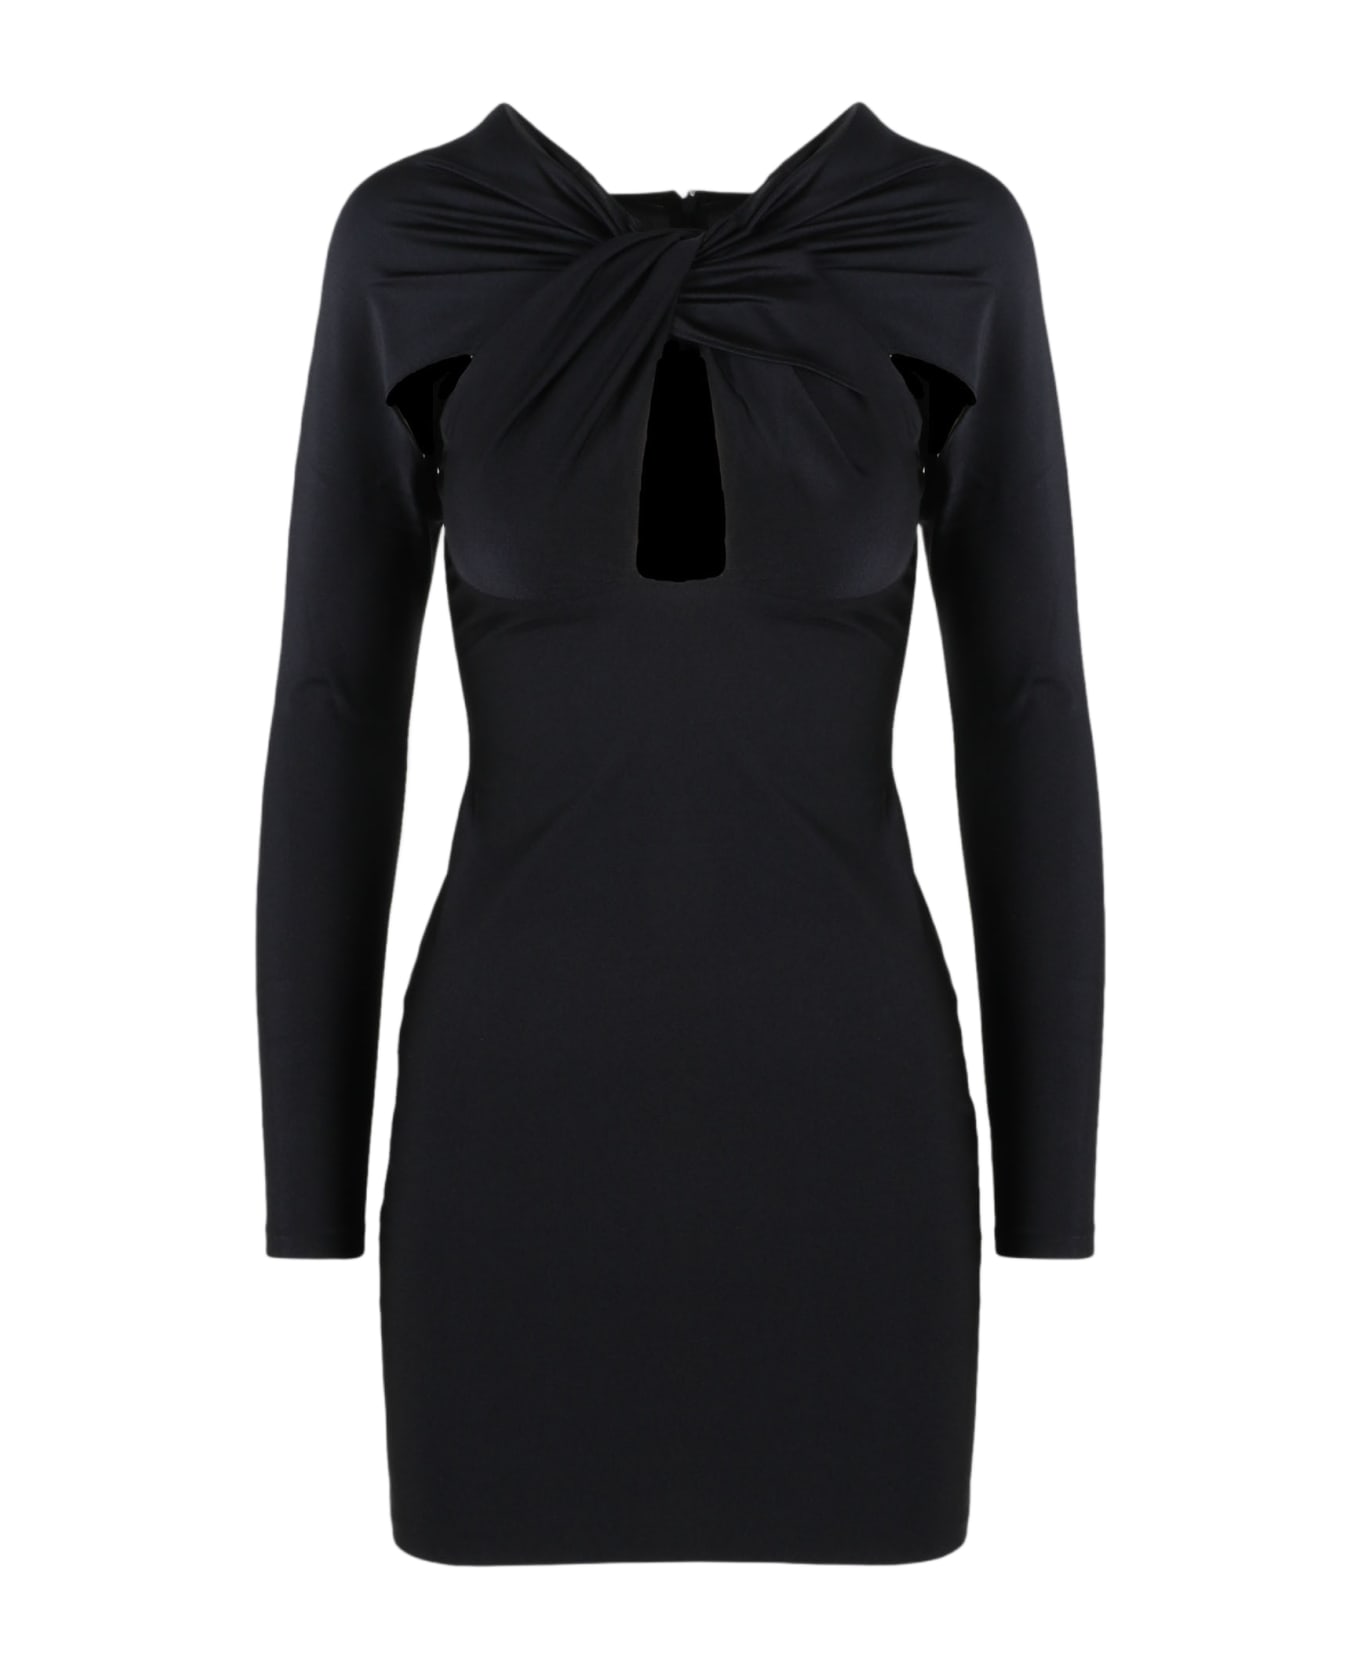 Coperni Twisted Cut Out Jersey Dress - Black